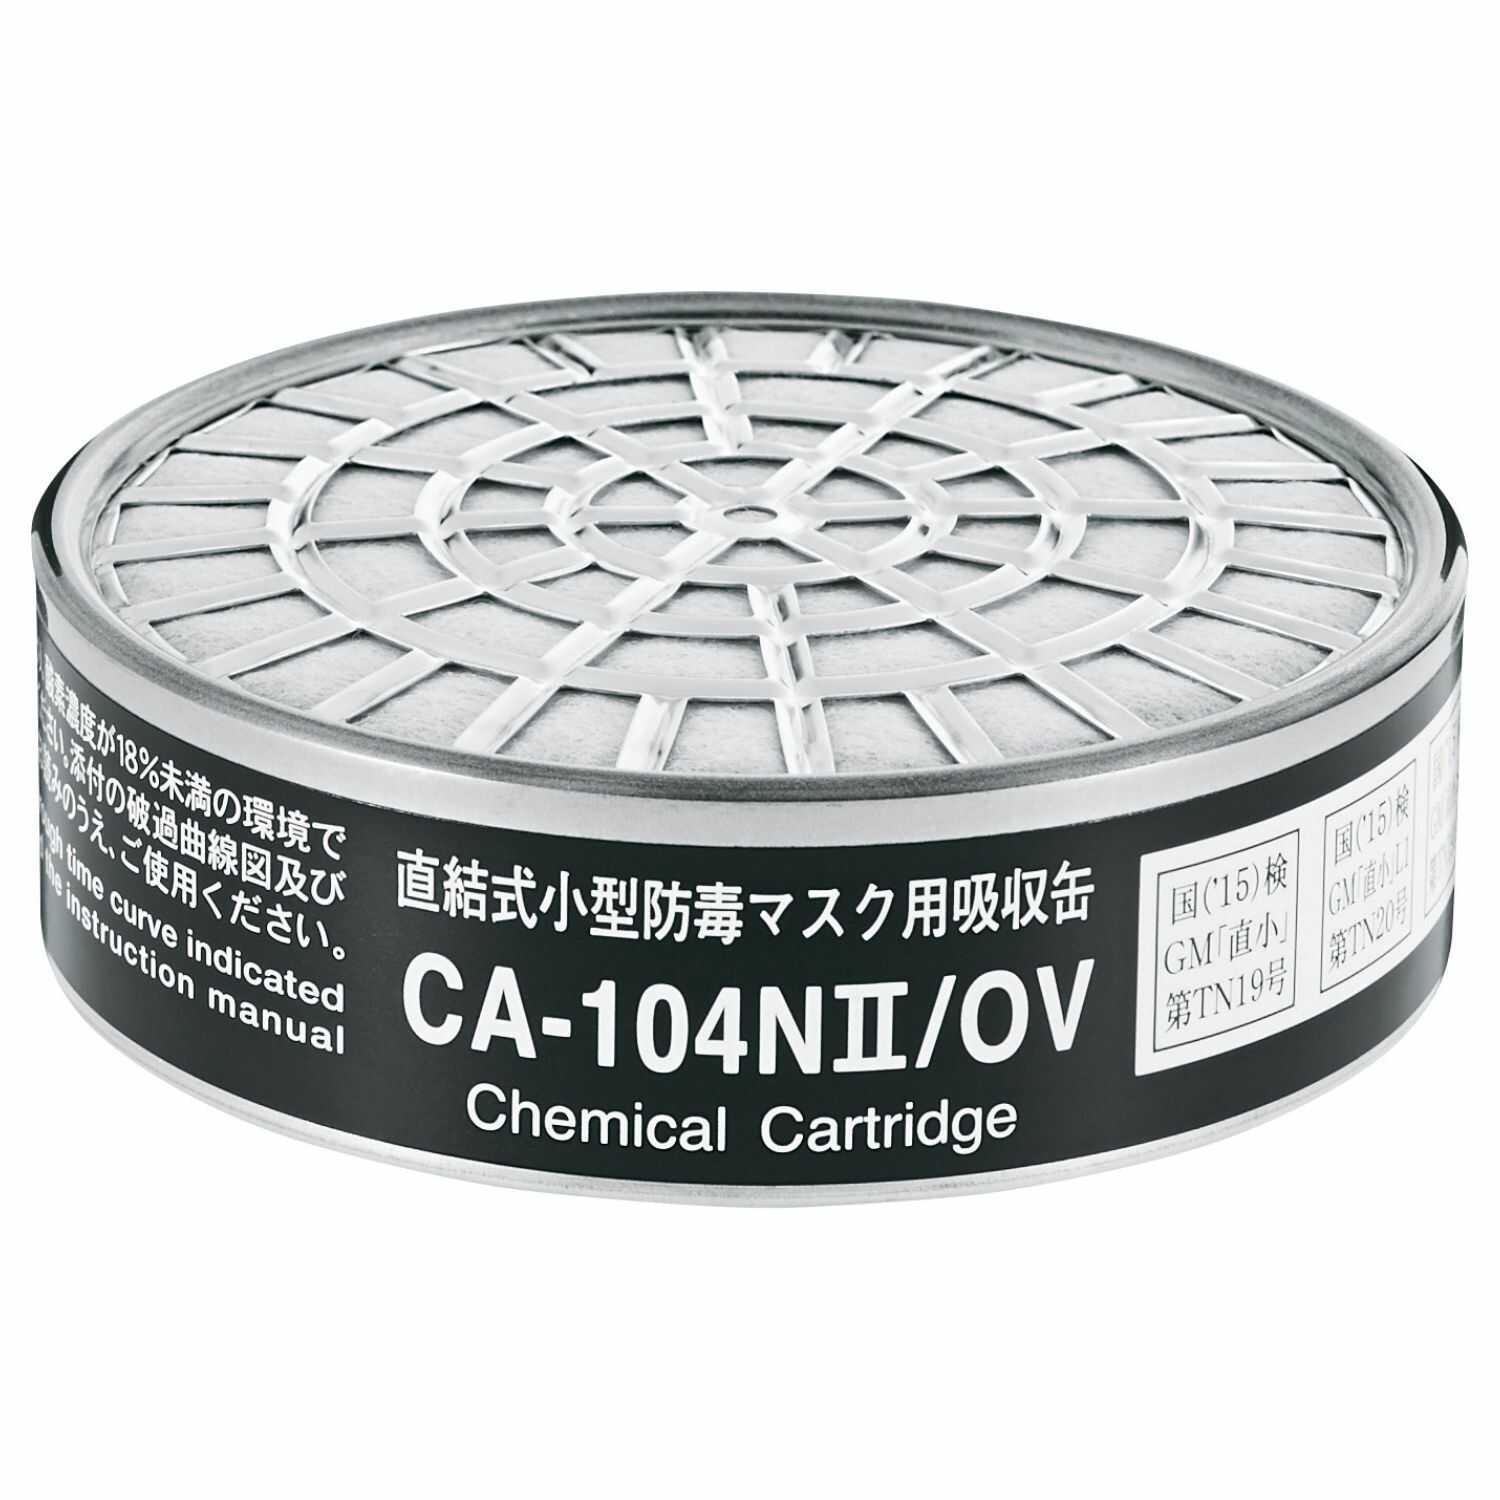 SHIGEMATSU CA104NII/OV Organic Gas Vapor Filter Cartridge , Black, 01185 (Pack of 1)